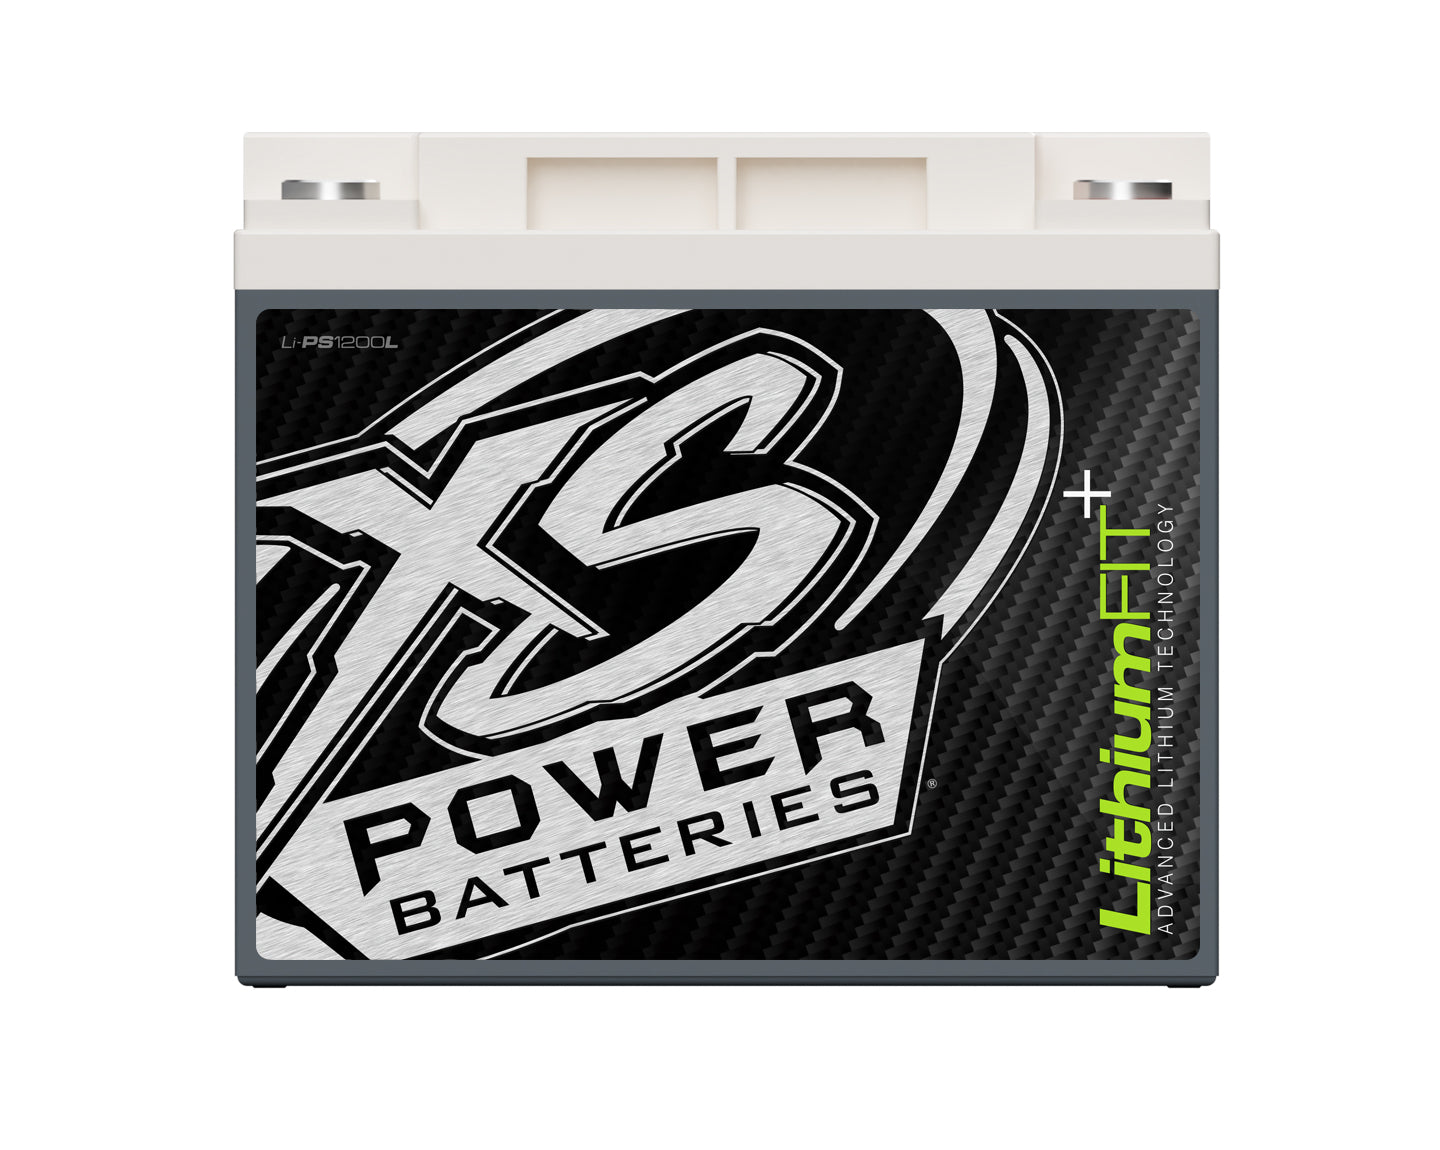 Li-PS1200L XS Power 12VDC Lithium Powersports Battery 960A 52.8Ah